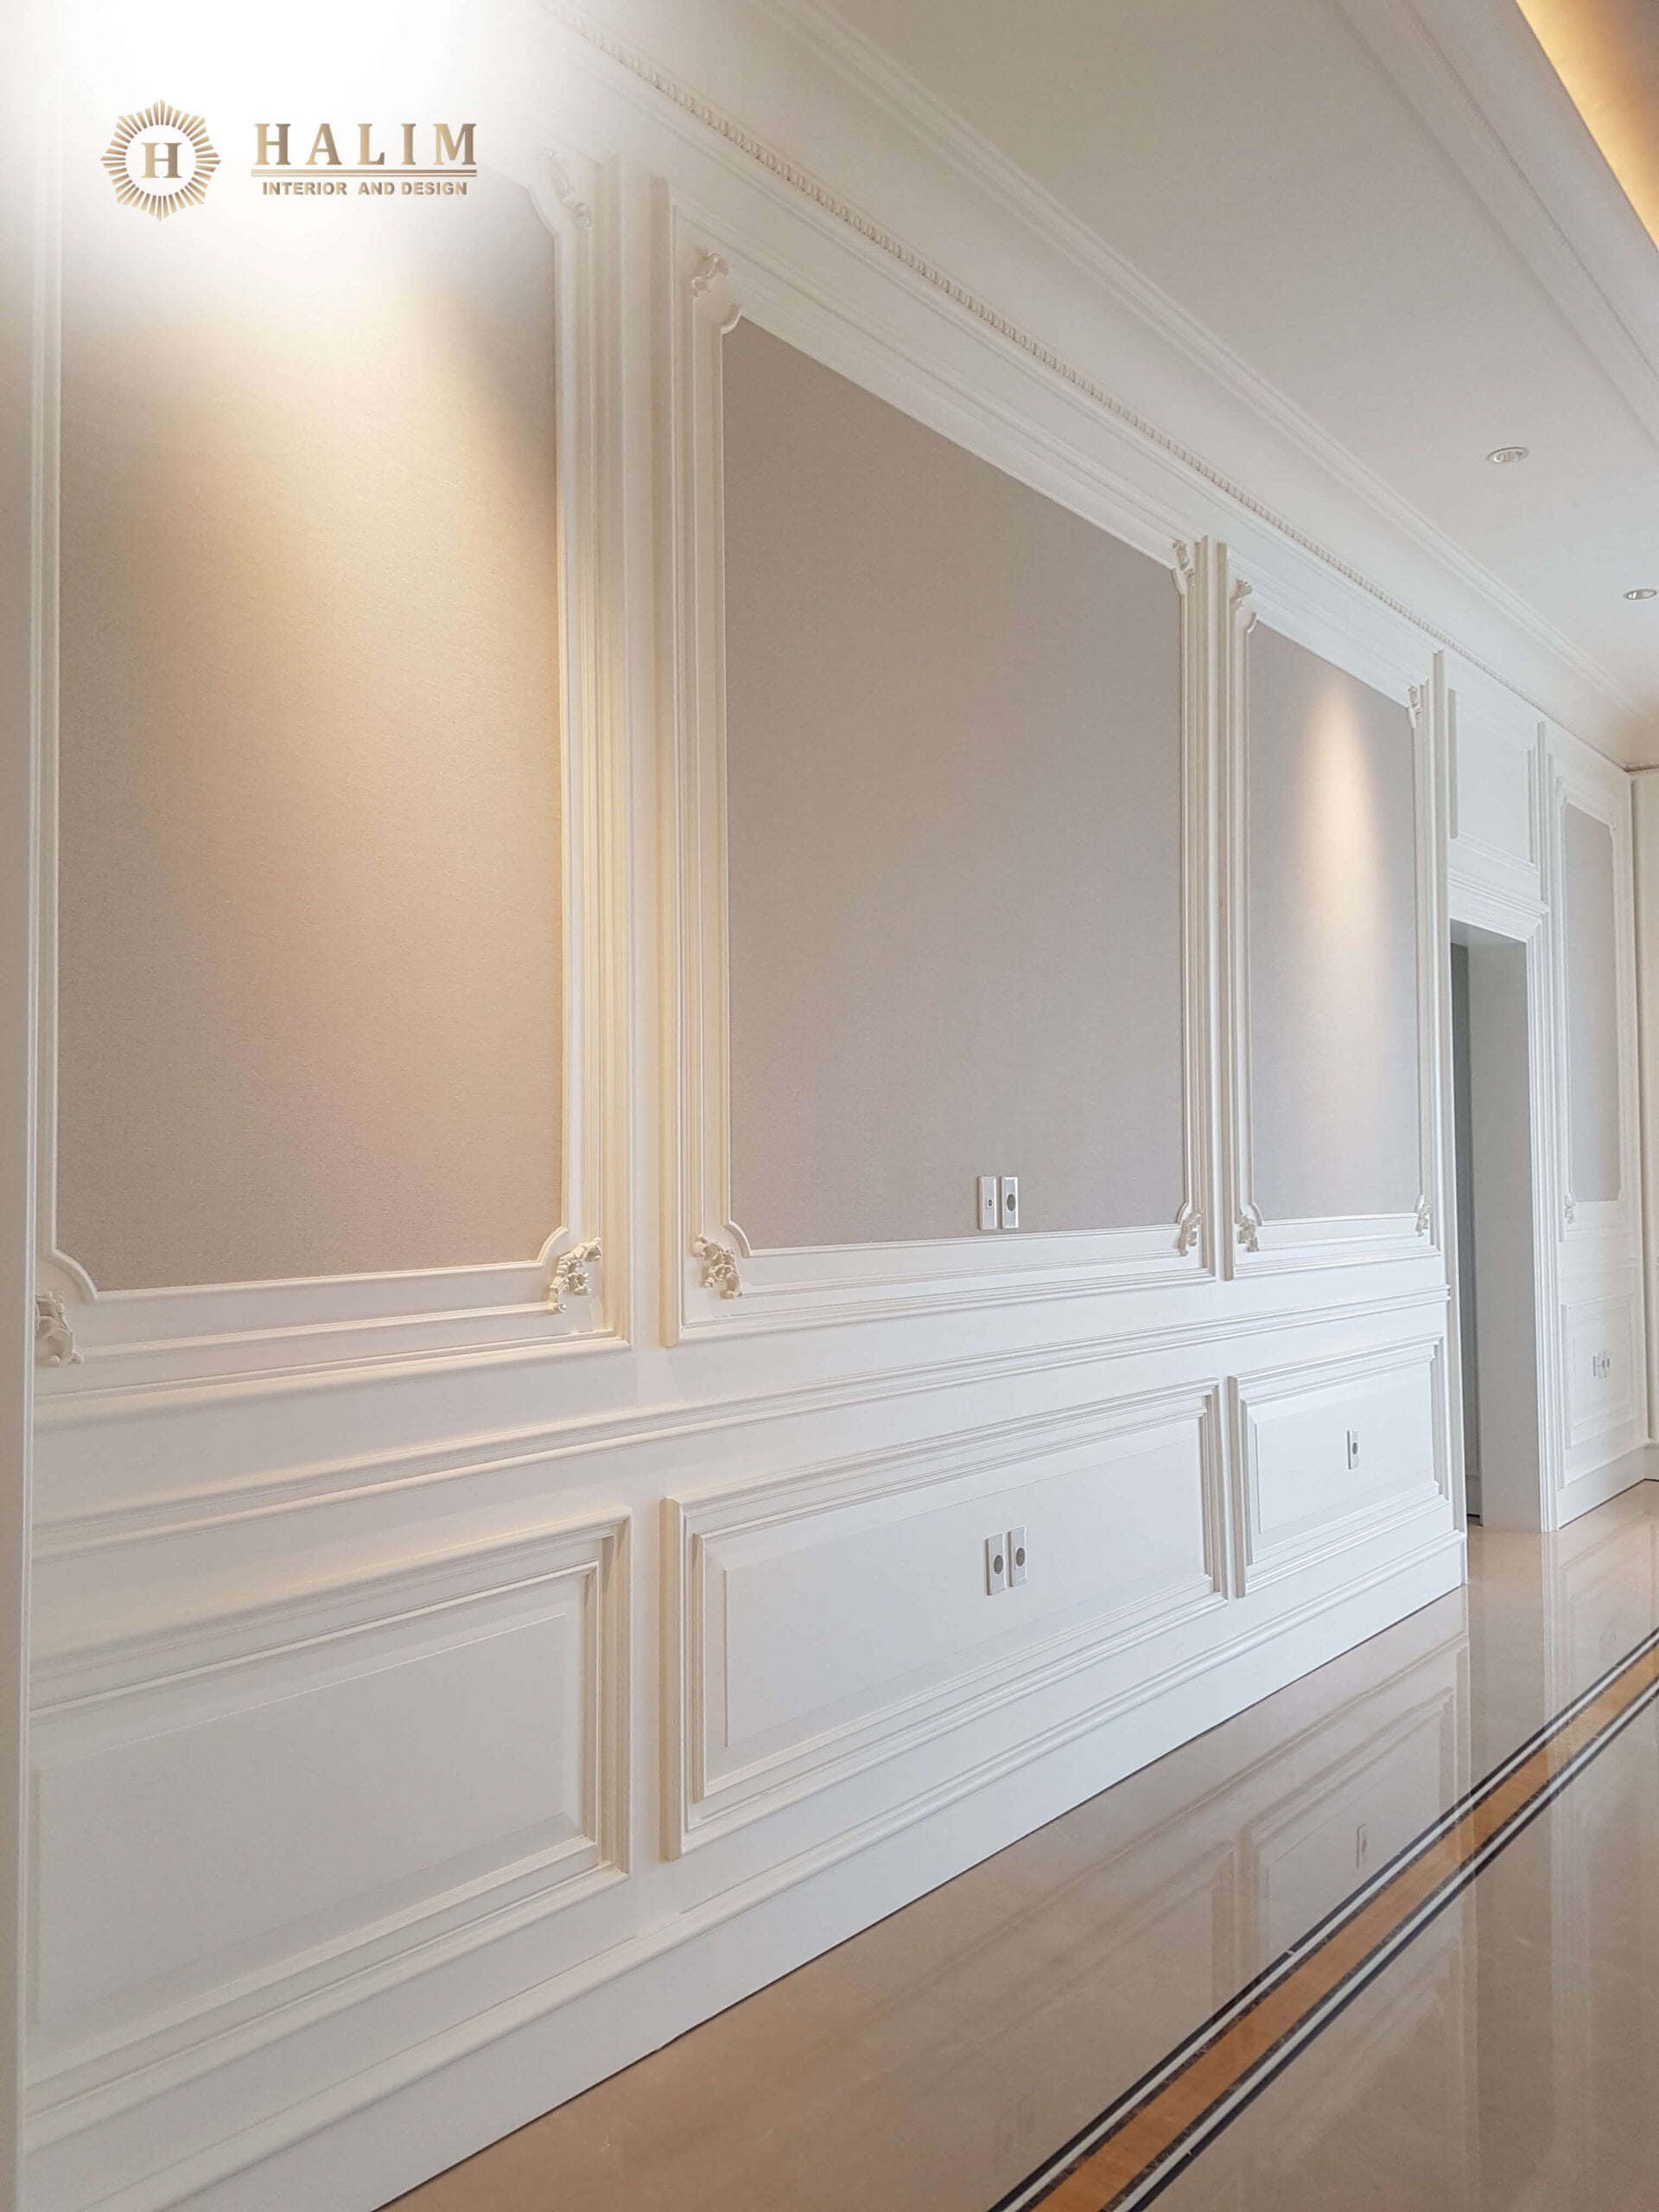 Halim Interior modern furniture contemporer american style minimalist european classic surabaya Kertajaya 13. Master Bedroom Lt 2 scaled